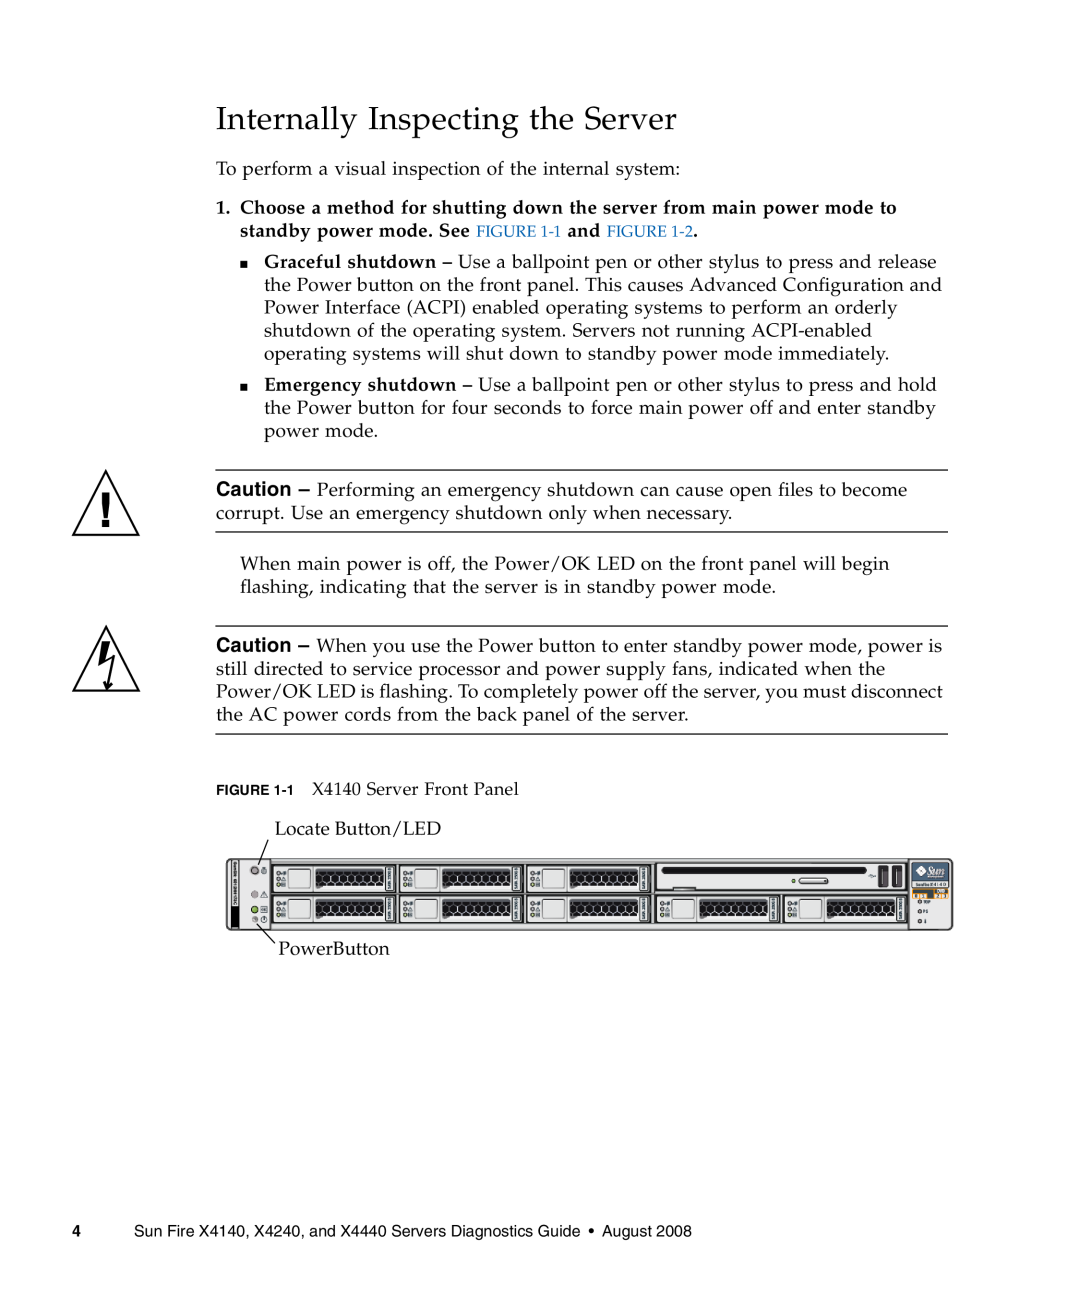 Sun Microsystems X4140, X4240, X4440 manual Internally Inspecting the Server 